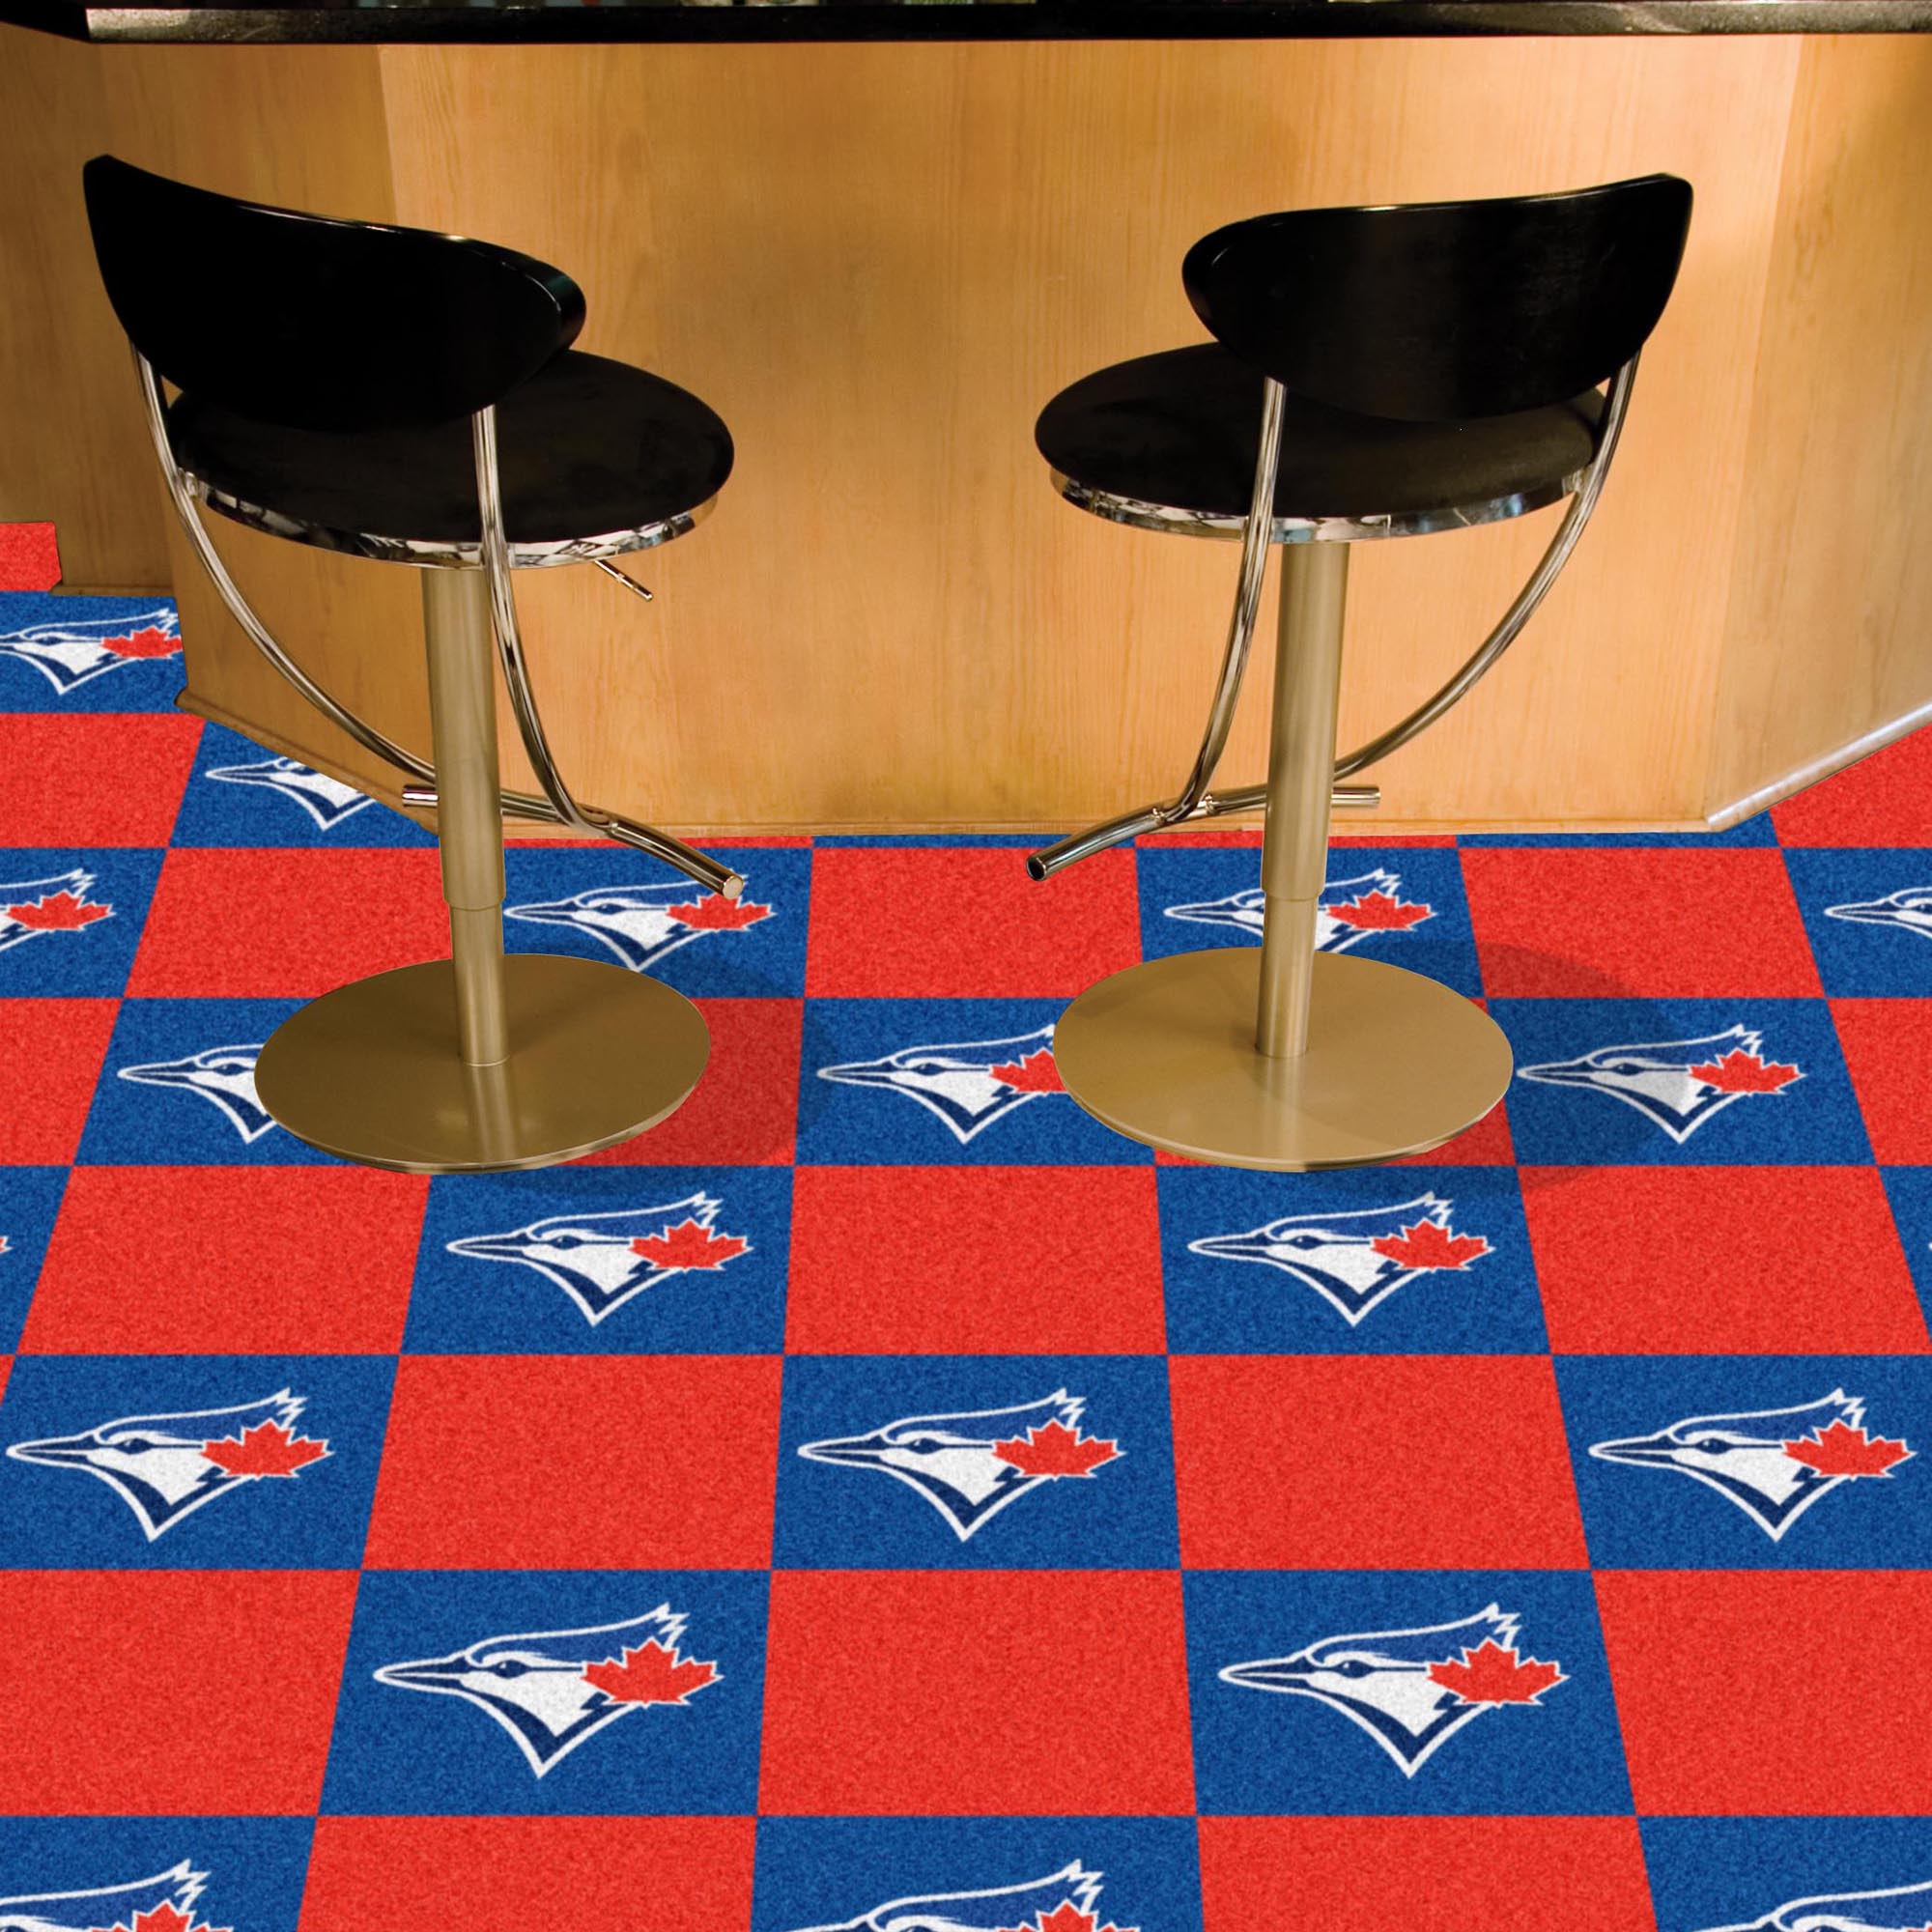 Toronto Blue Jays Team Carpet Tiles - 45 sq ft